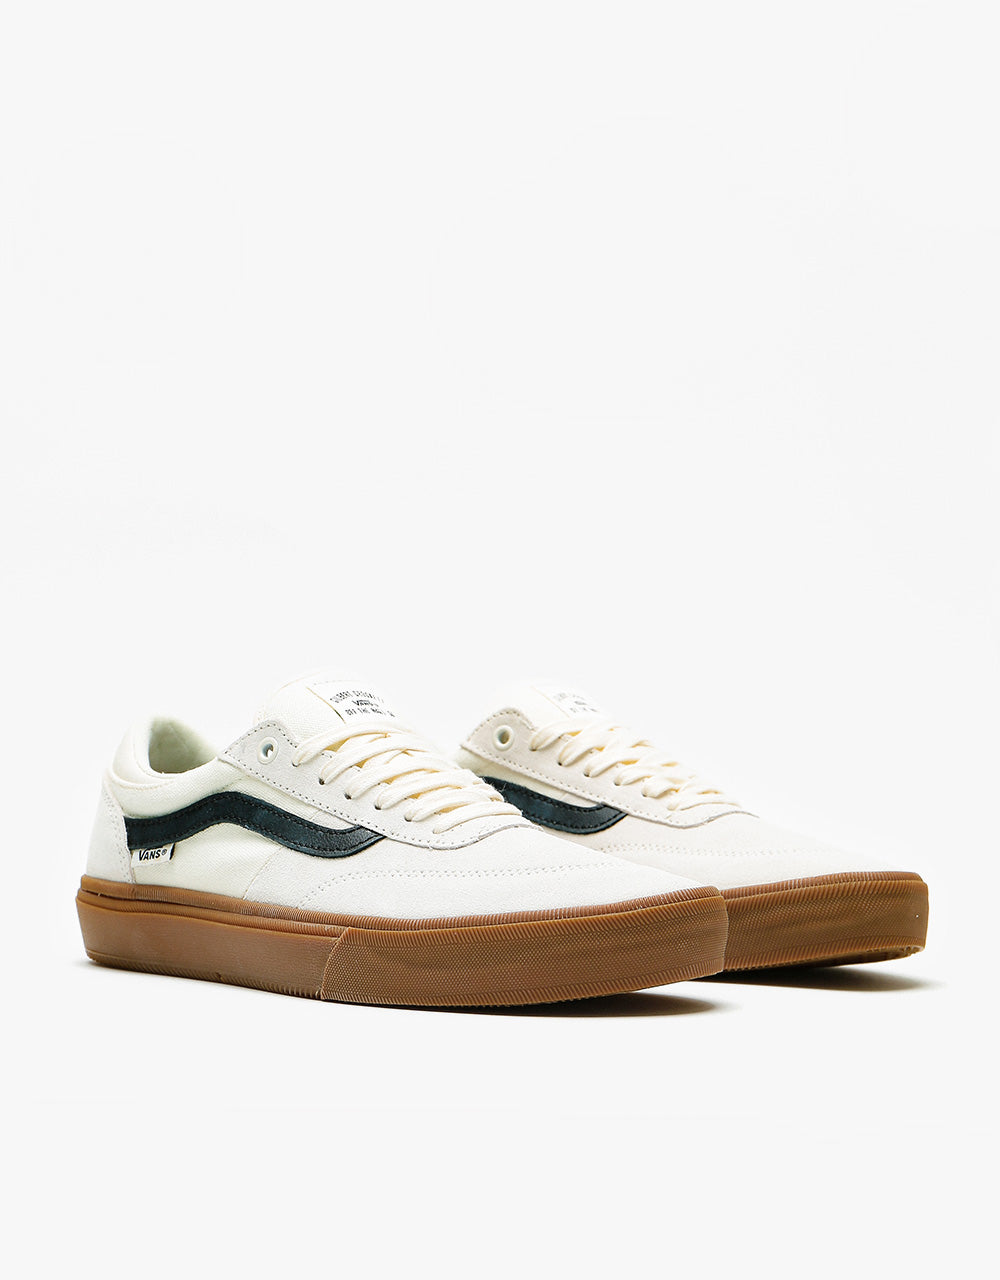 Vans Gilbert Crockett Pro Skate Shoes - Marshmallow/Gum